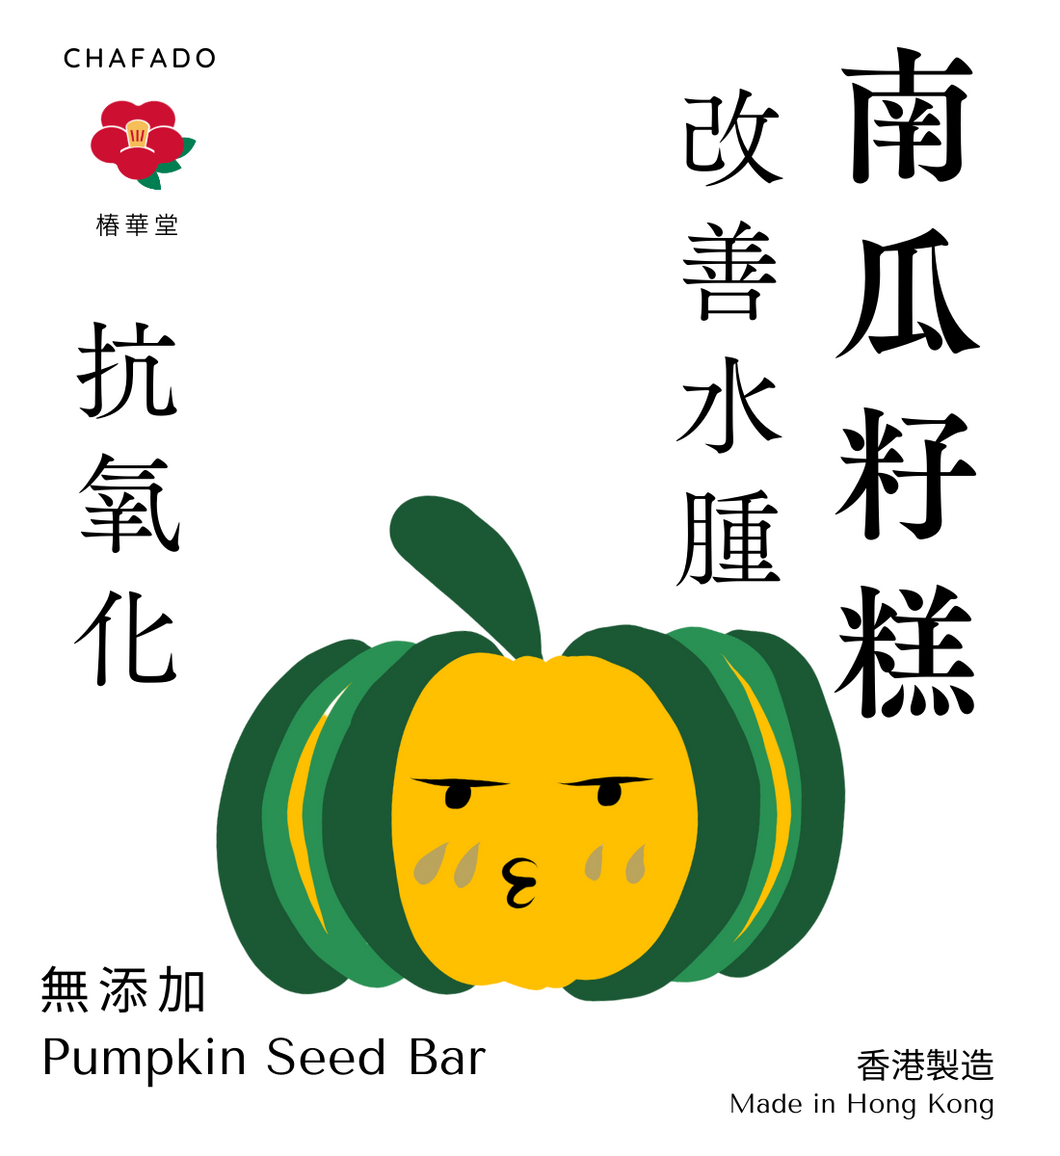 CHAFADO Pumpkin Seed Bar丨椿華堂 南瓜籽糕